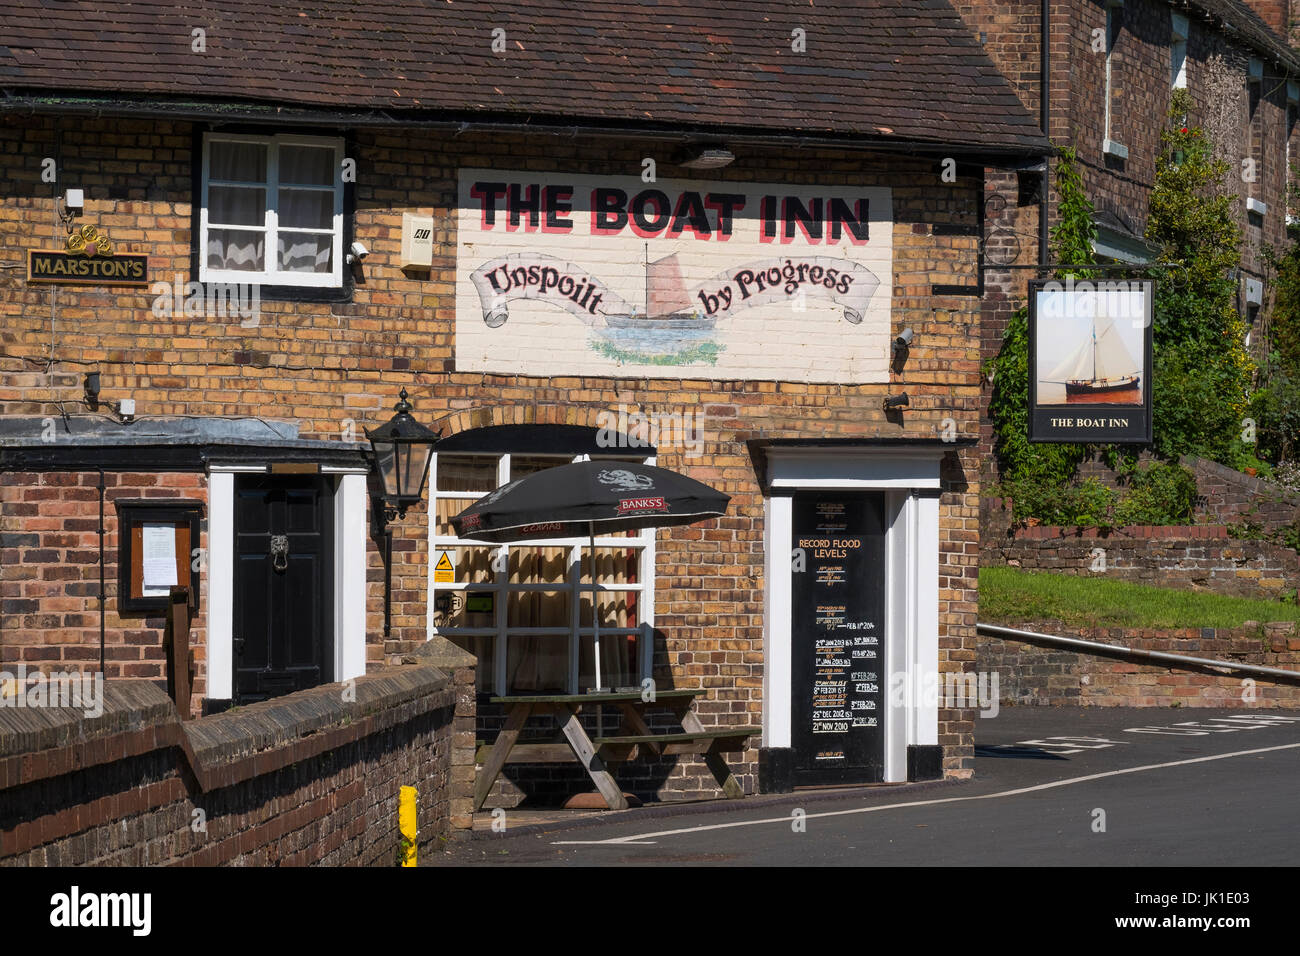 El Inn at Coalport barco, cerca de Ironbridge, Shropshire, Inglaterra, Reino Unido. Foto de stock